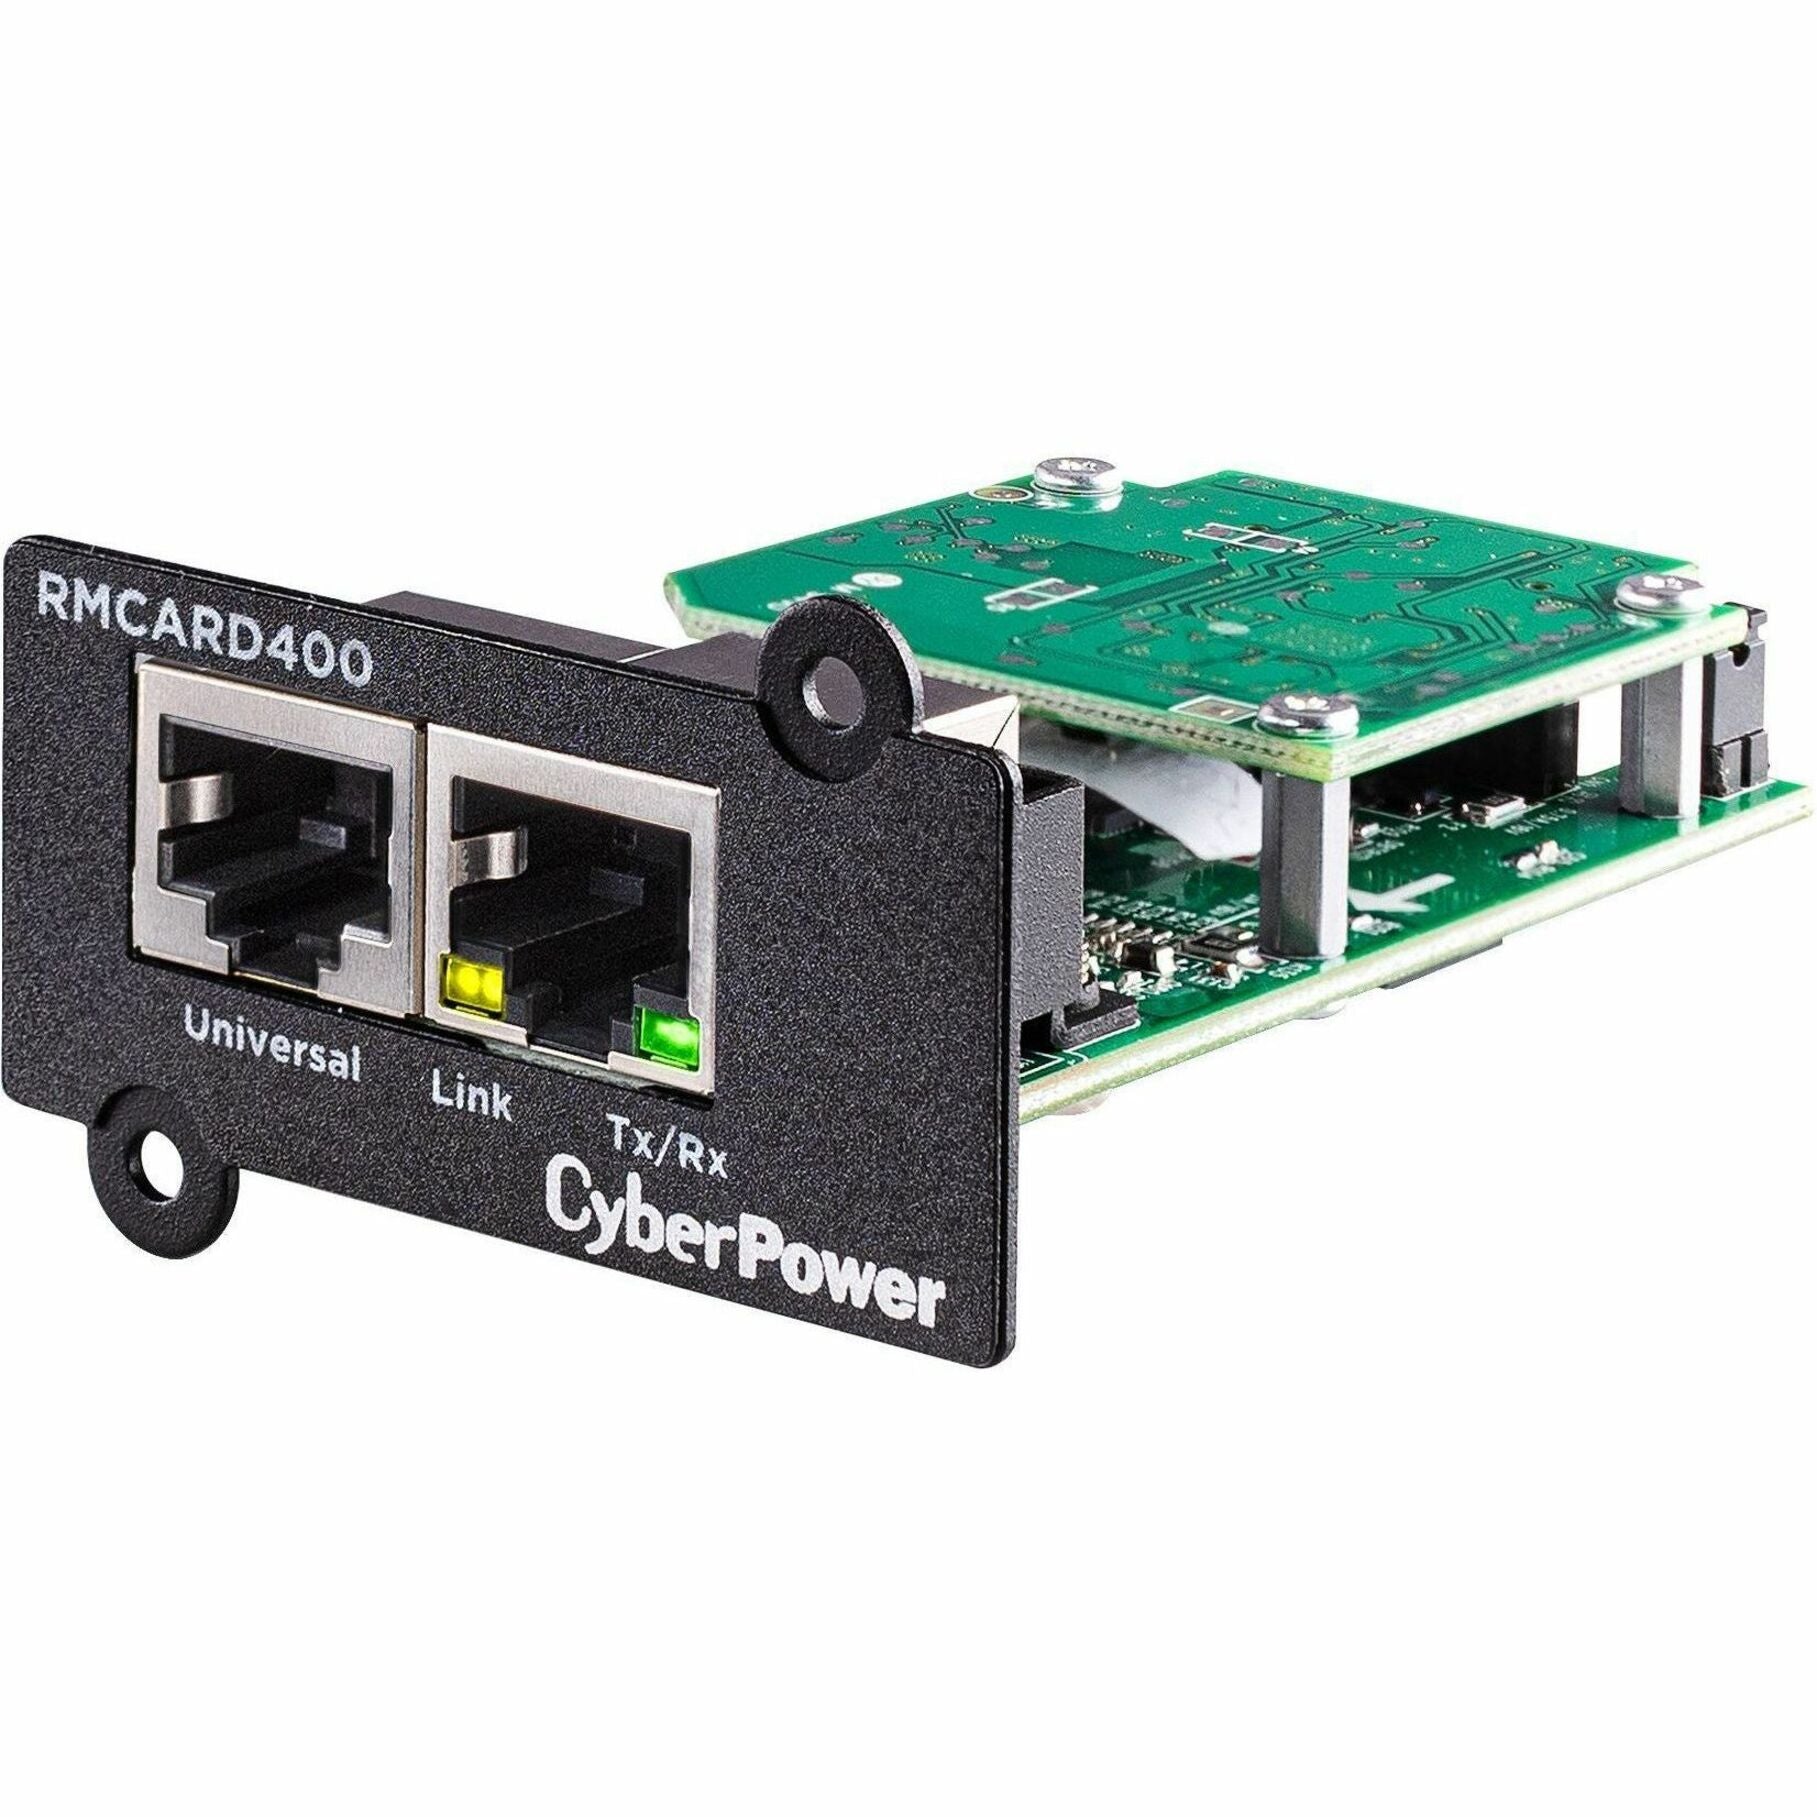 CyberPower RMCARD400 UPS Management Adapter, Remote Network Management, Gigabit Ethernet